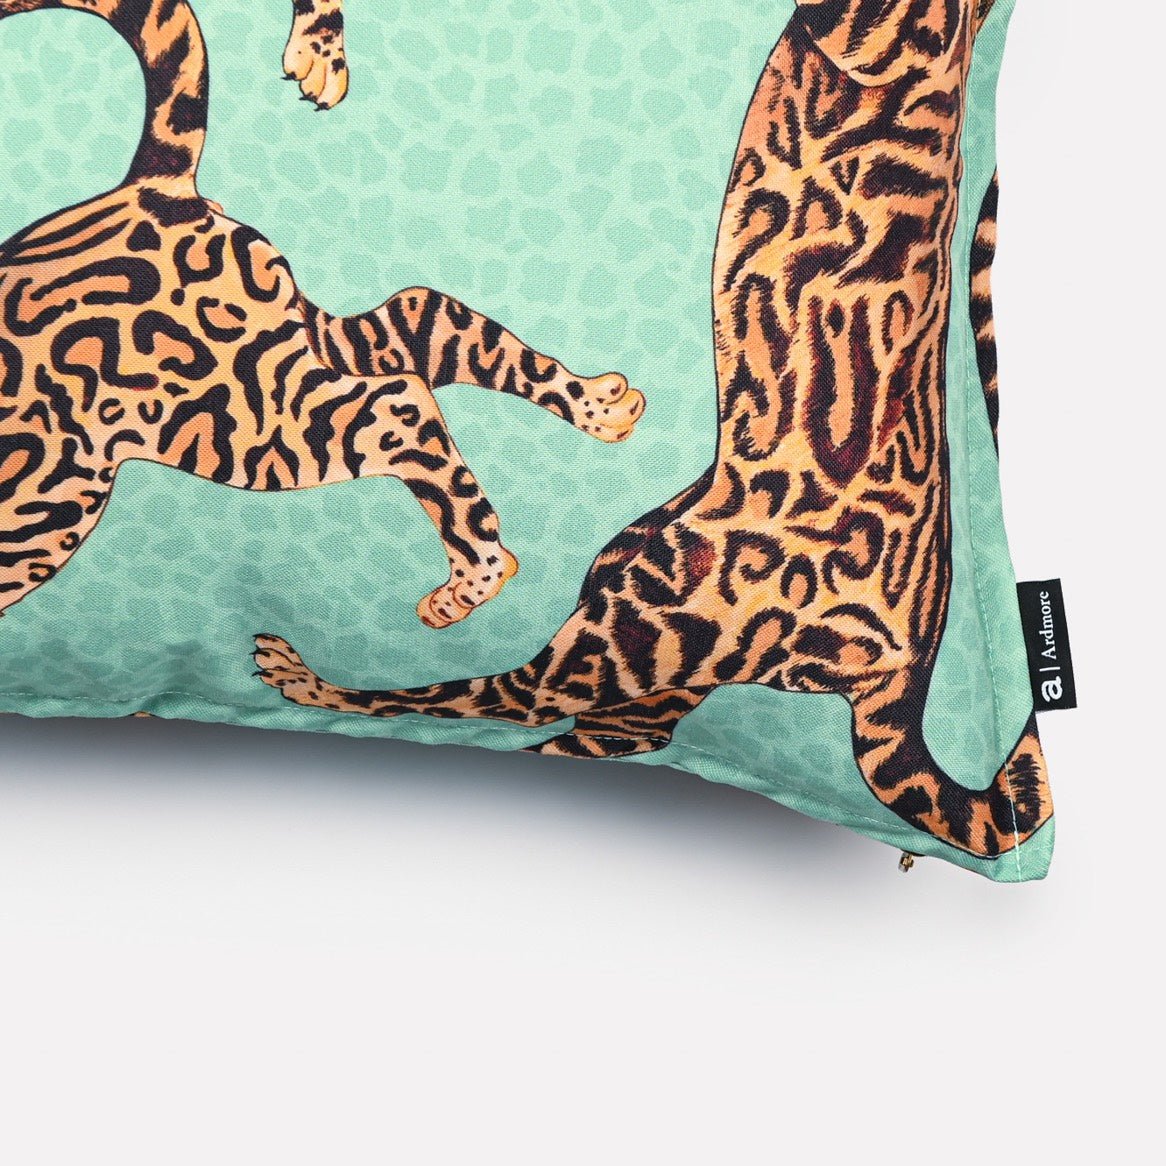 Cheetah King Jade Outdoor Cushion Cover